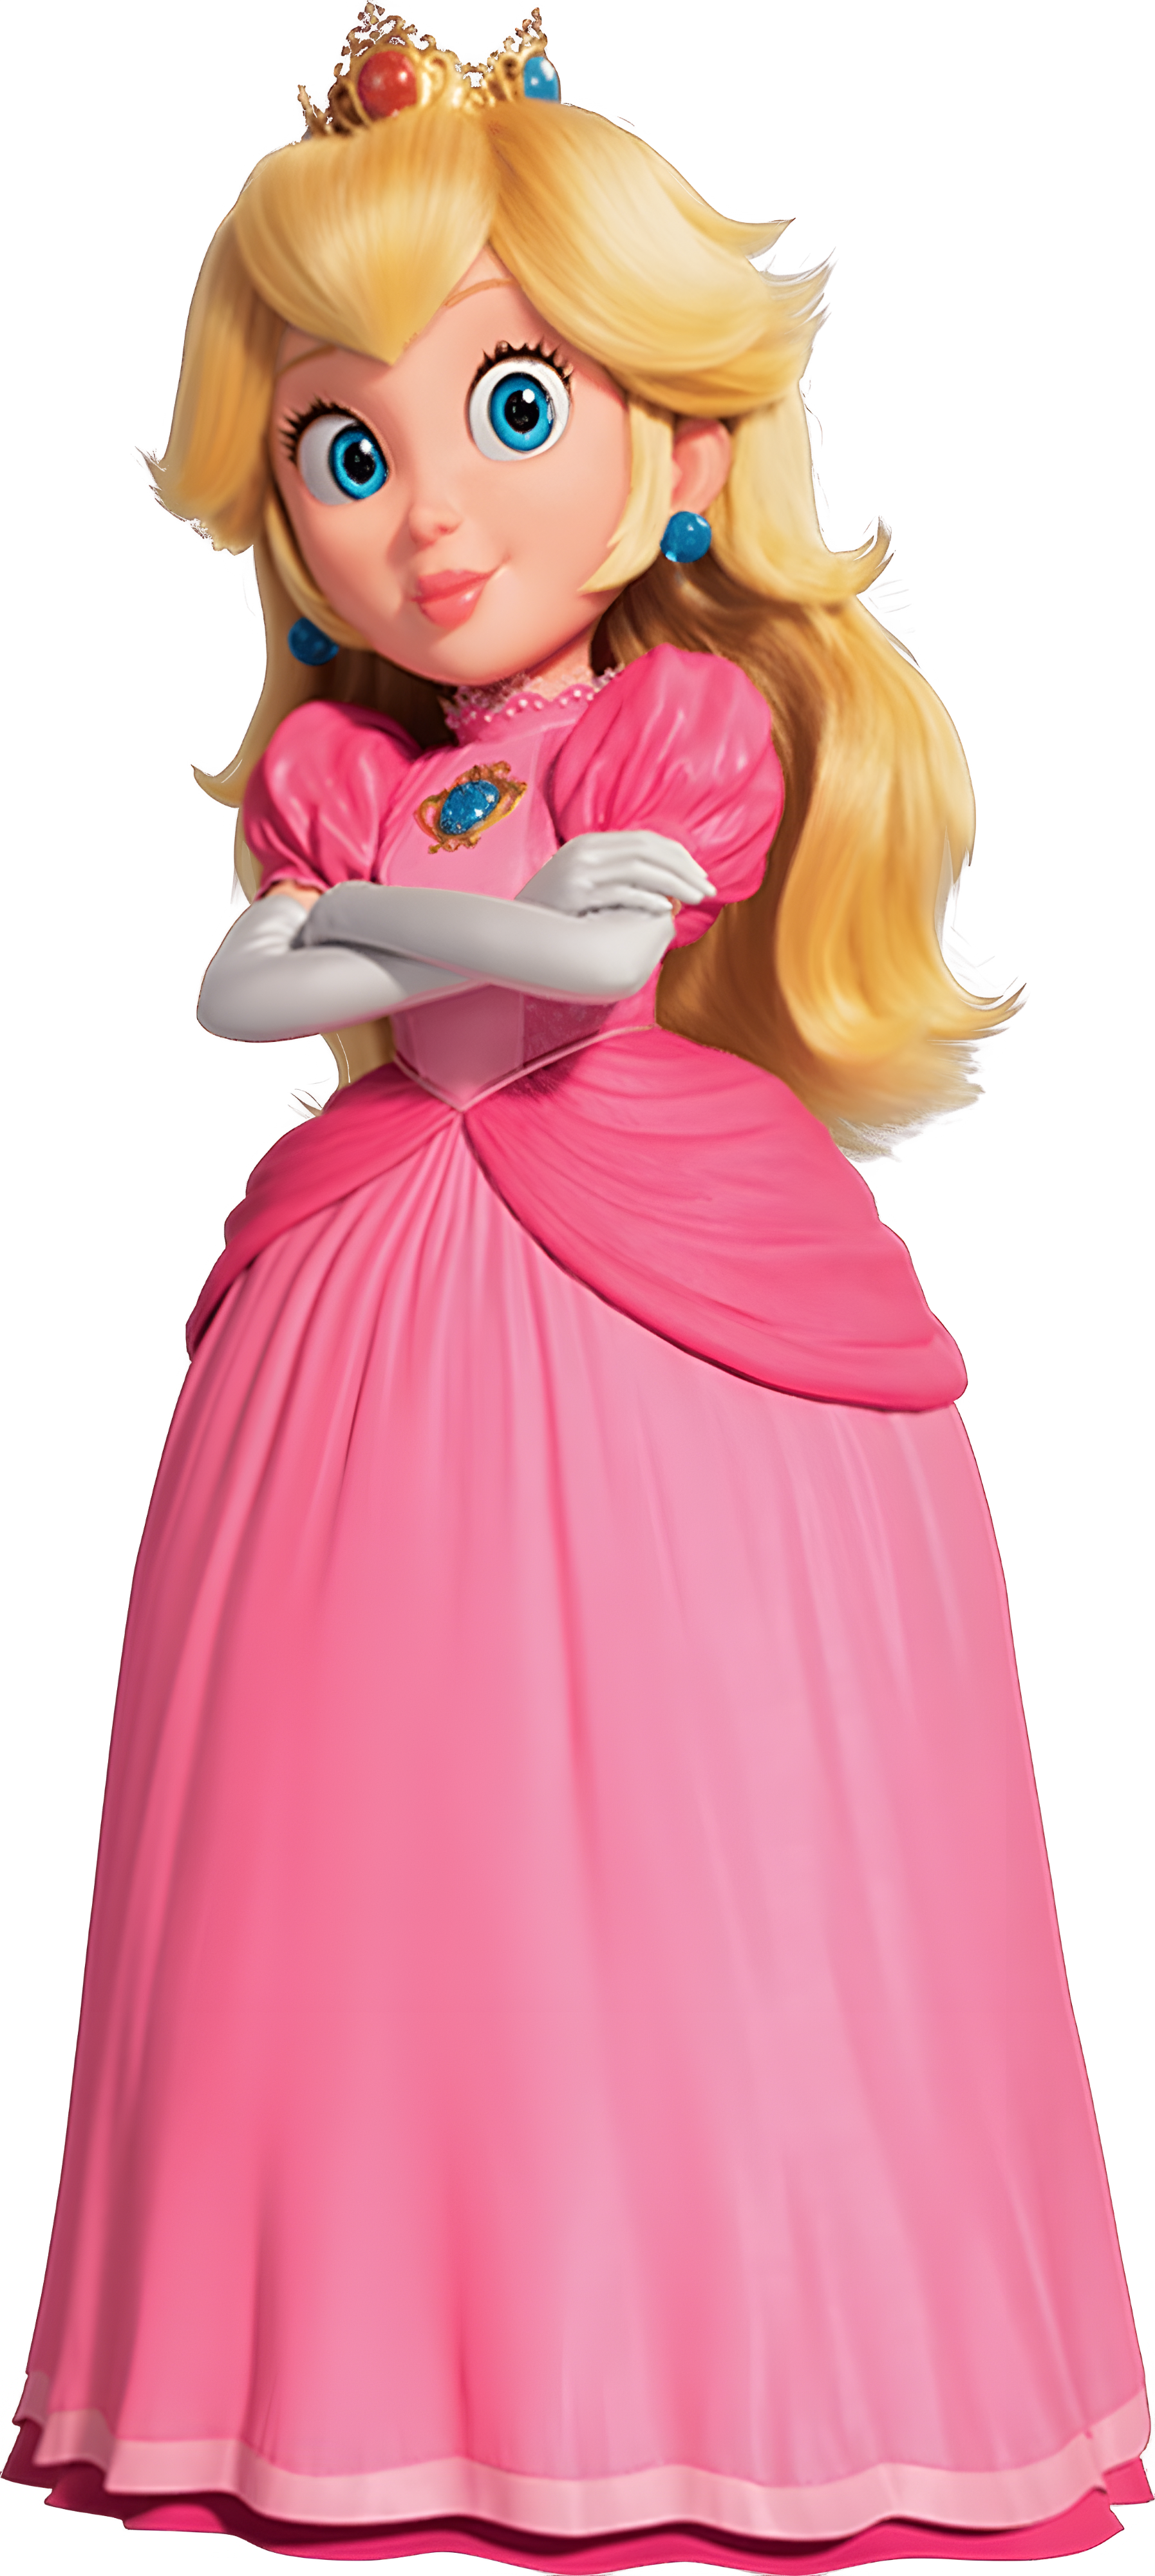 Princess Peach Training Clip from Nintendo's The Super Mario Bros